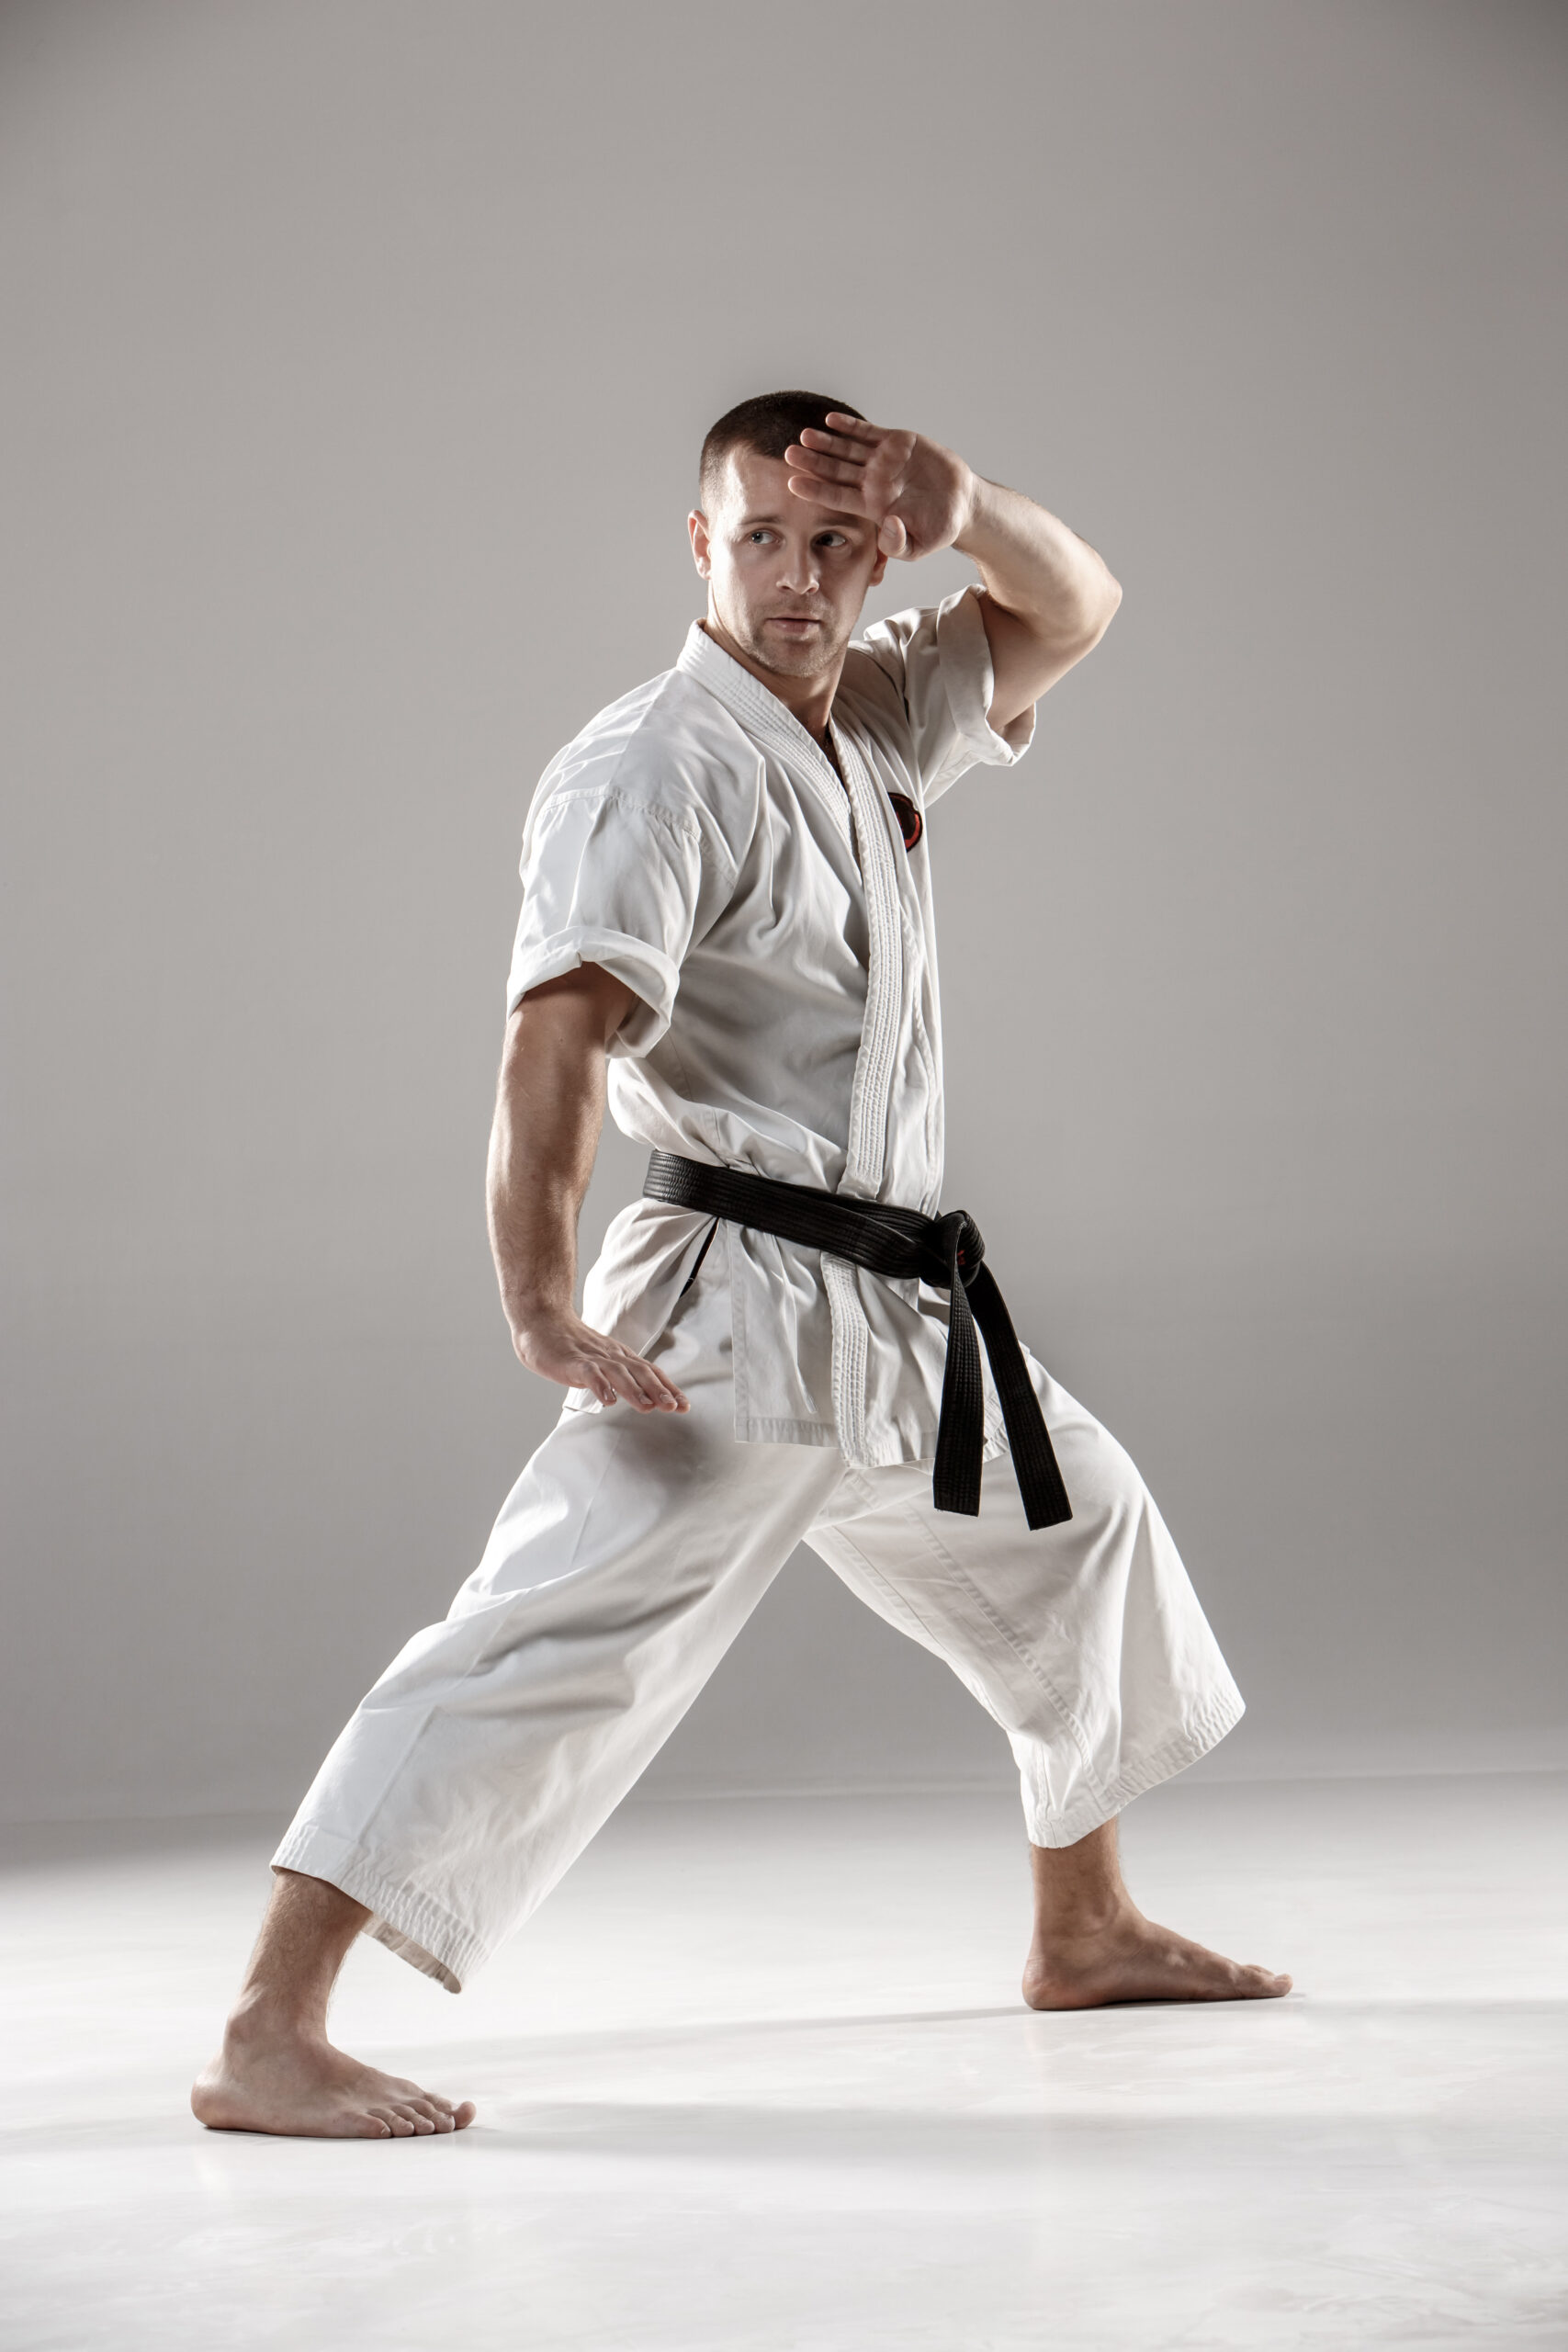 Man in white kimono and black belt training karate over gray background.